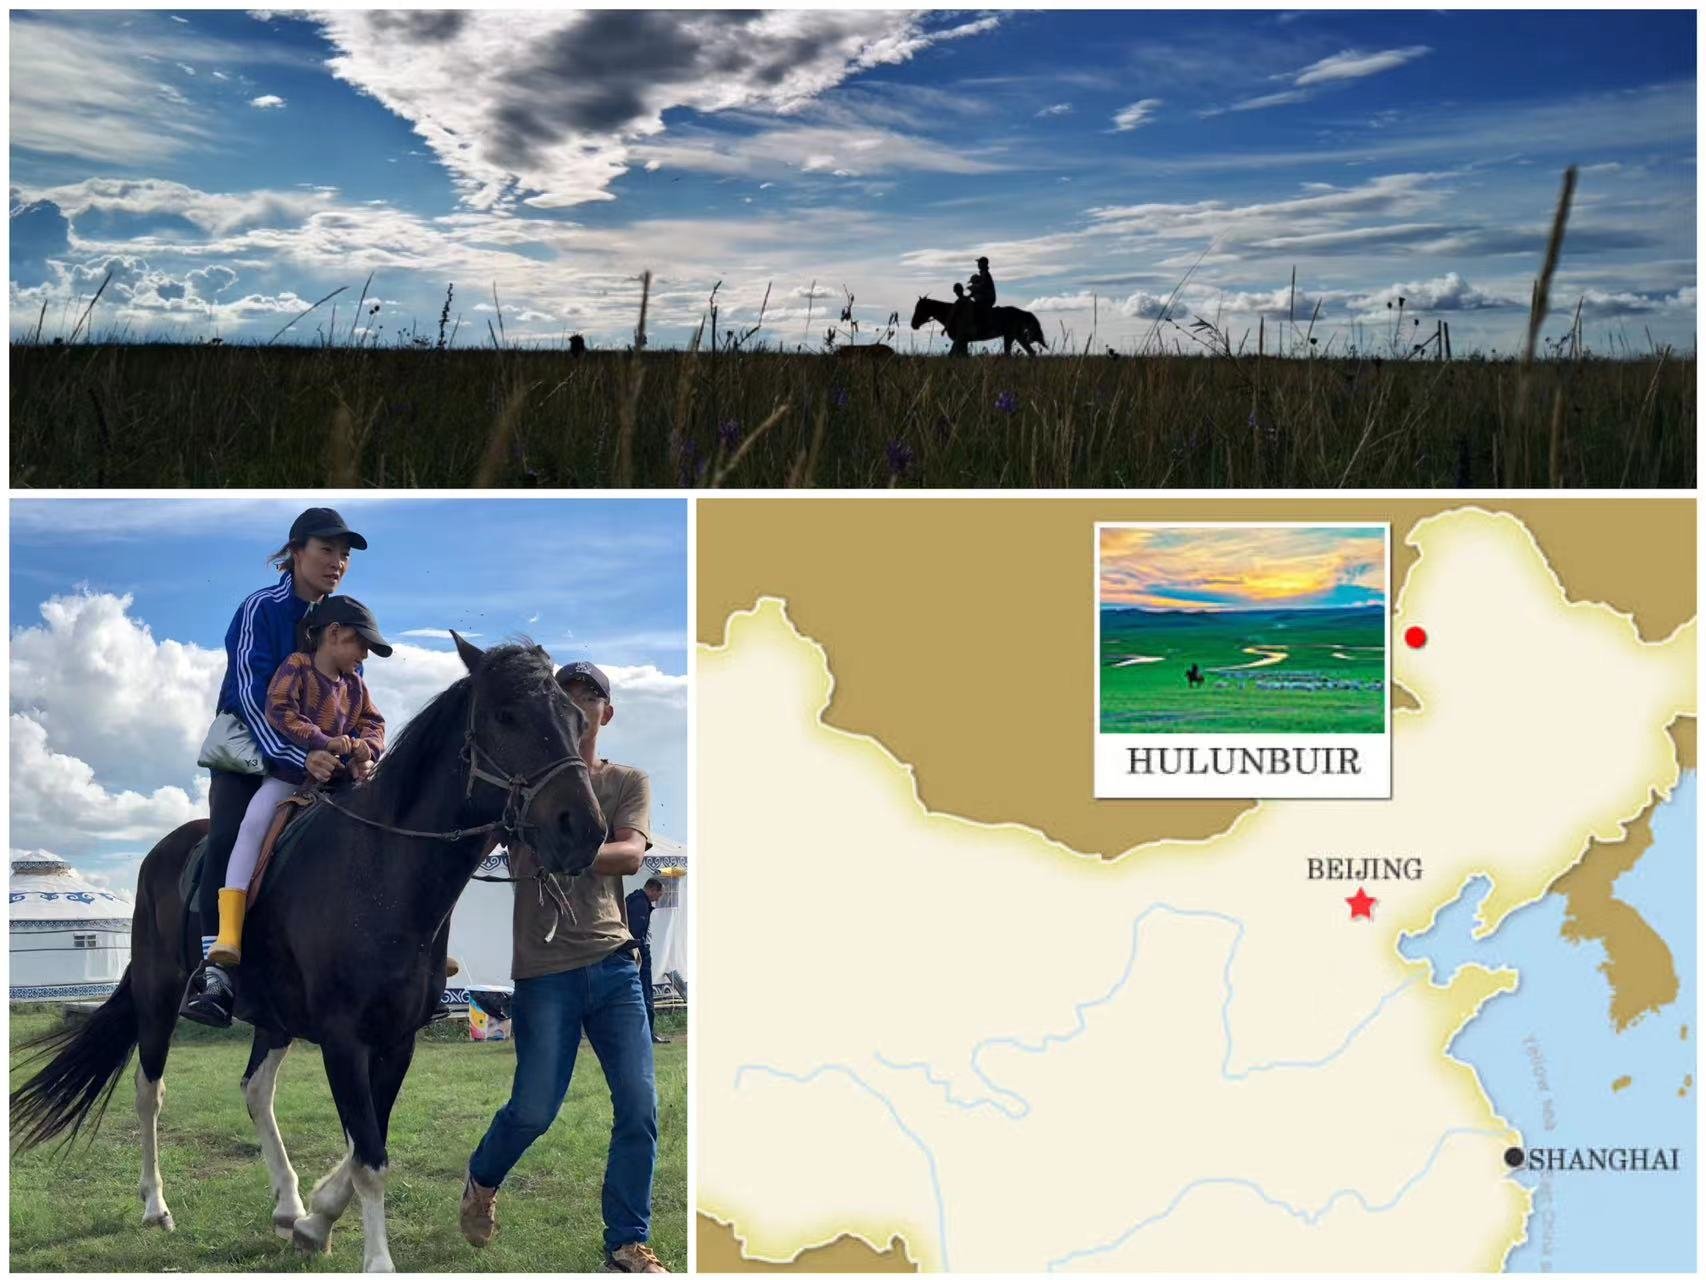 Kim YoungAh's favourite destination in China: 呼伦贝尔 [Hulunbuir], on the Mongolian prairie.